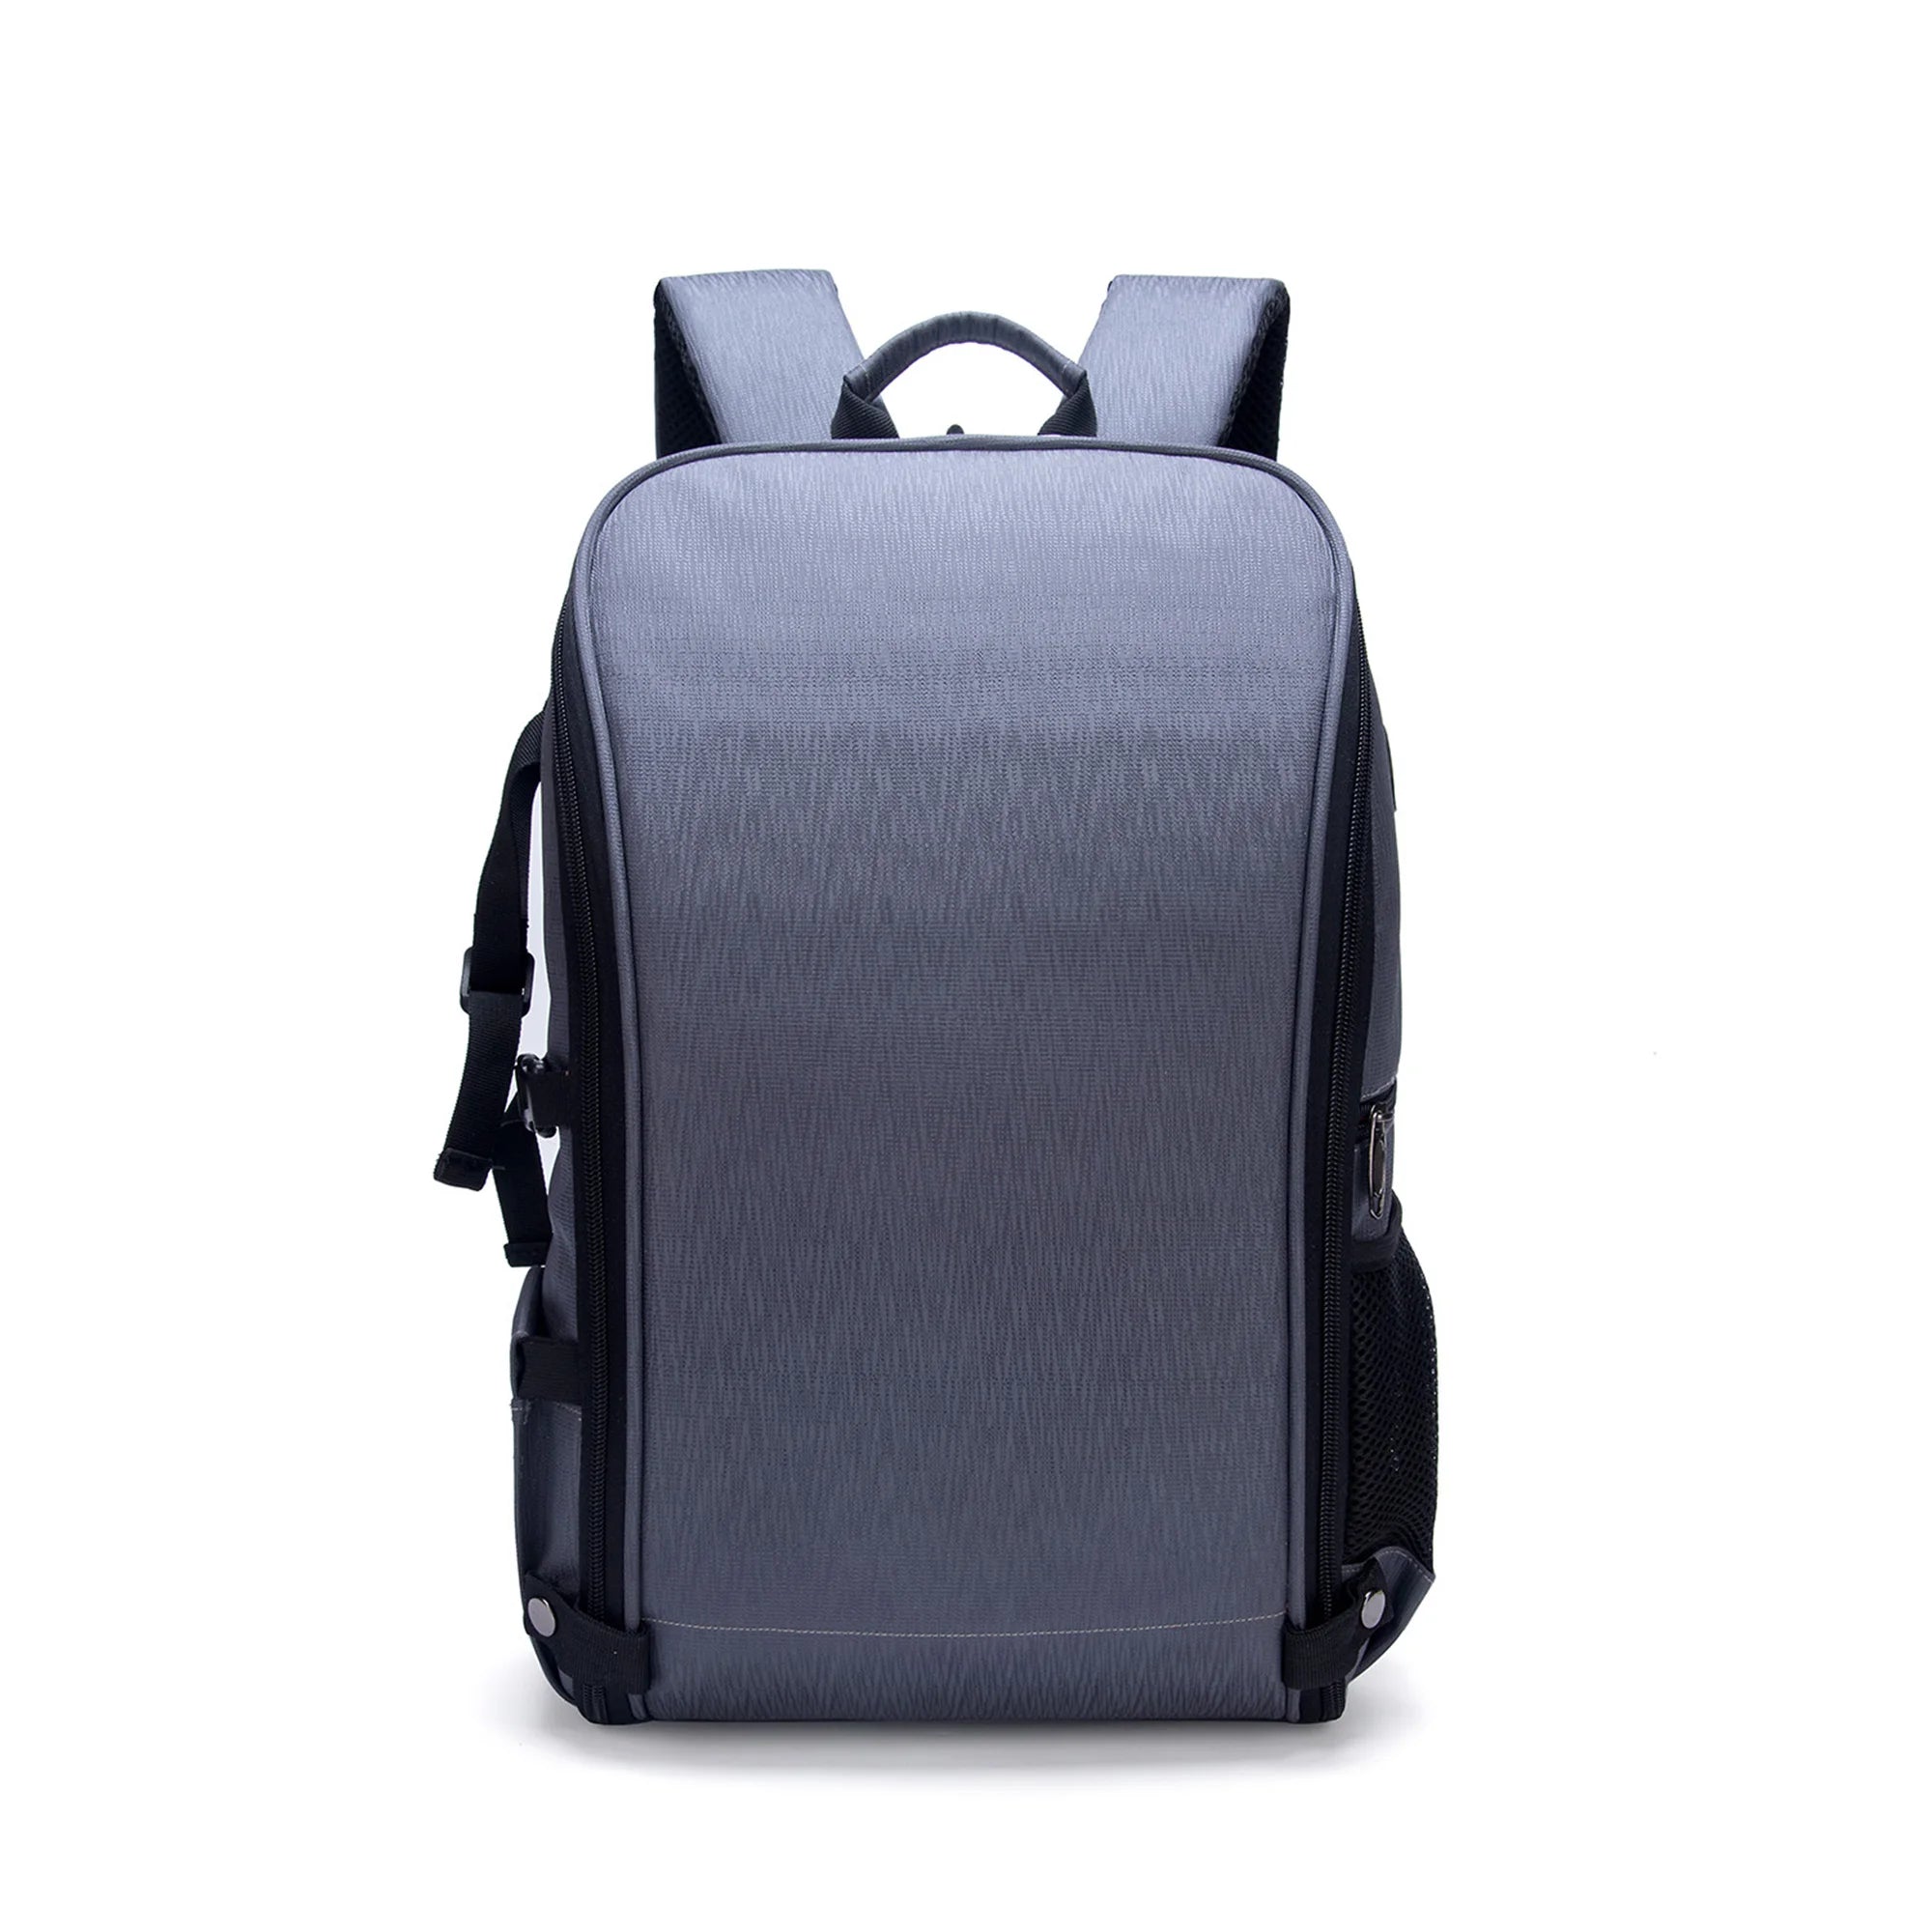 Drone Backpack Portable Waterproof Photography Storage Bag Outdoor Shoulder Bag For DJI AV